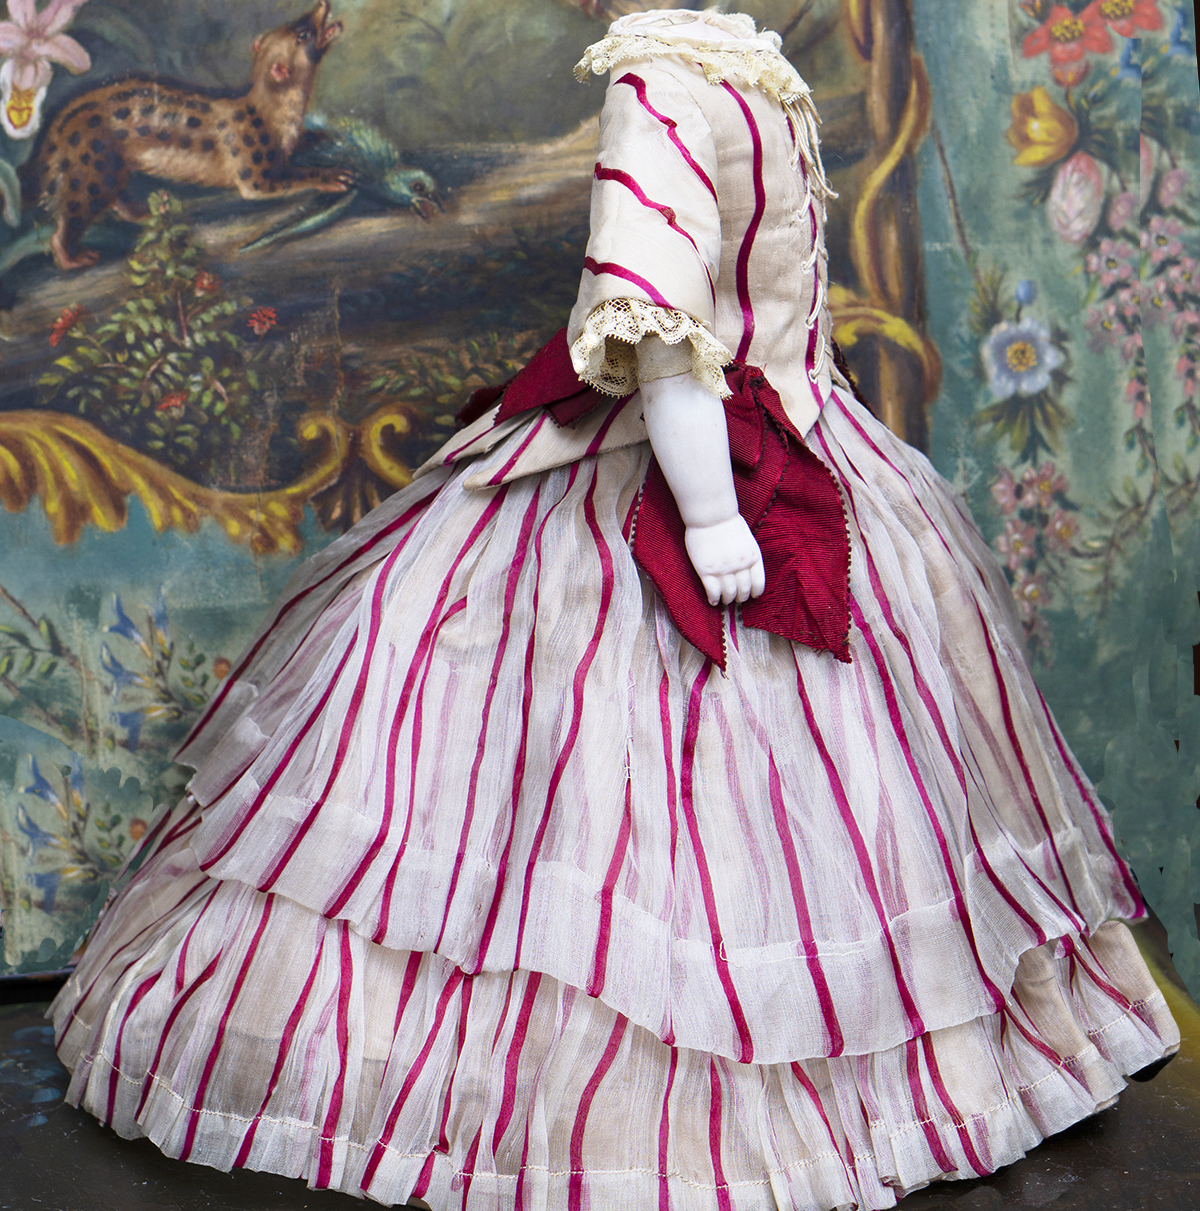 Antique fashion doll dress